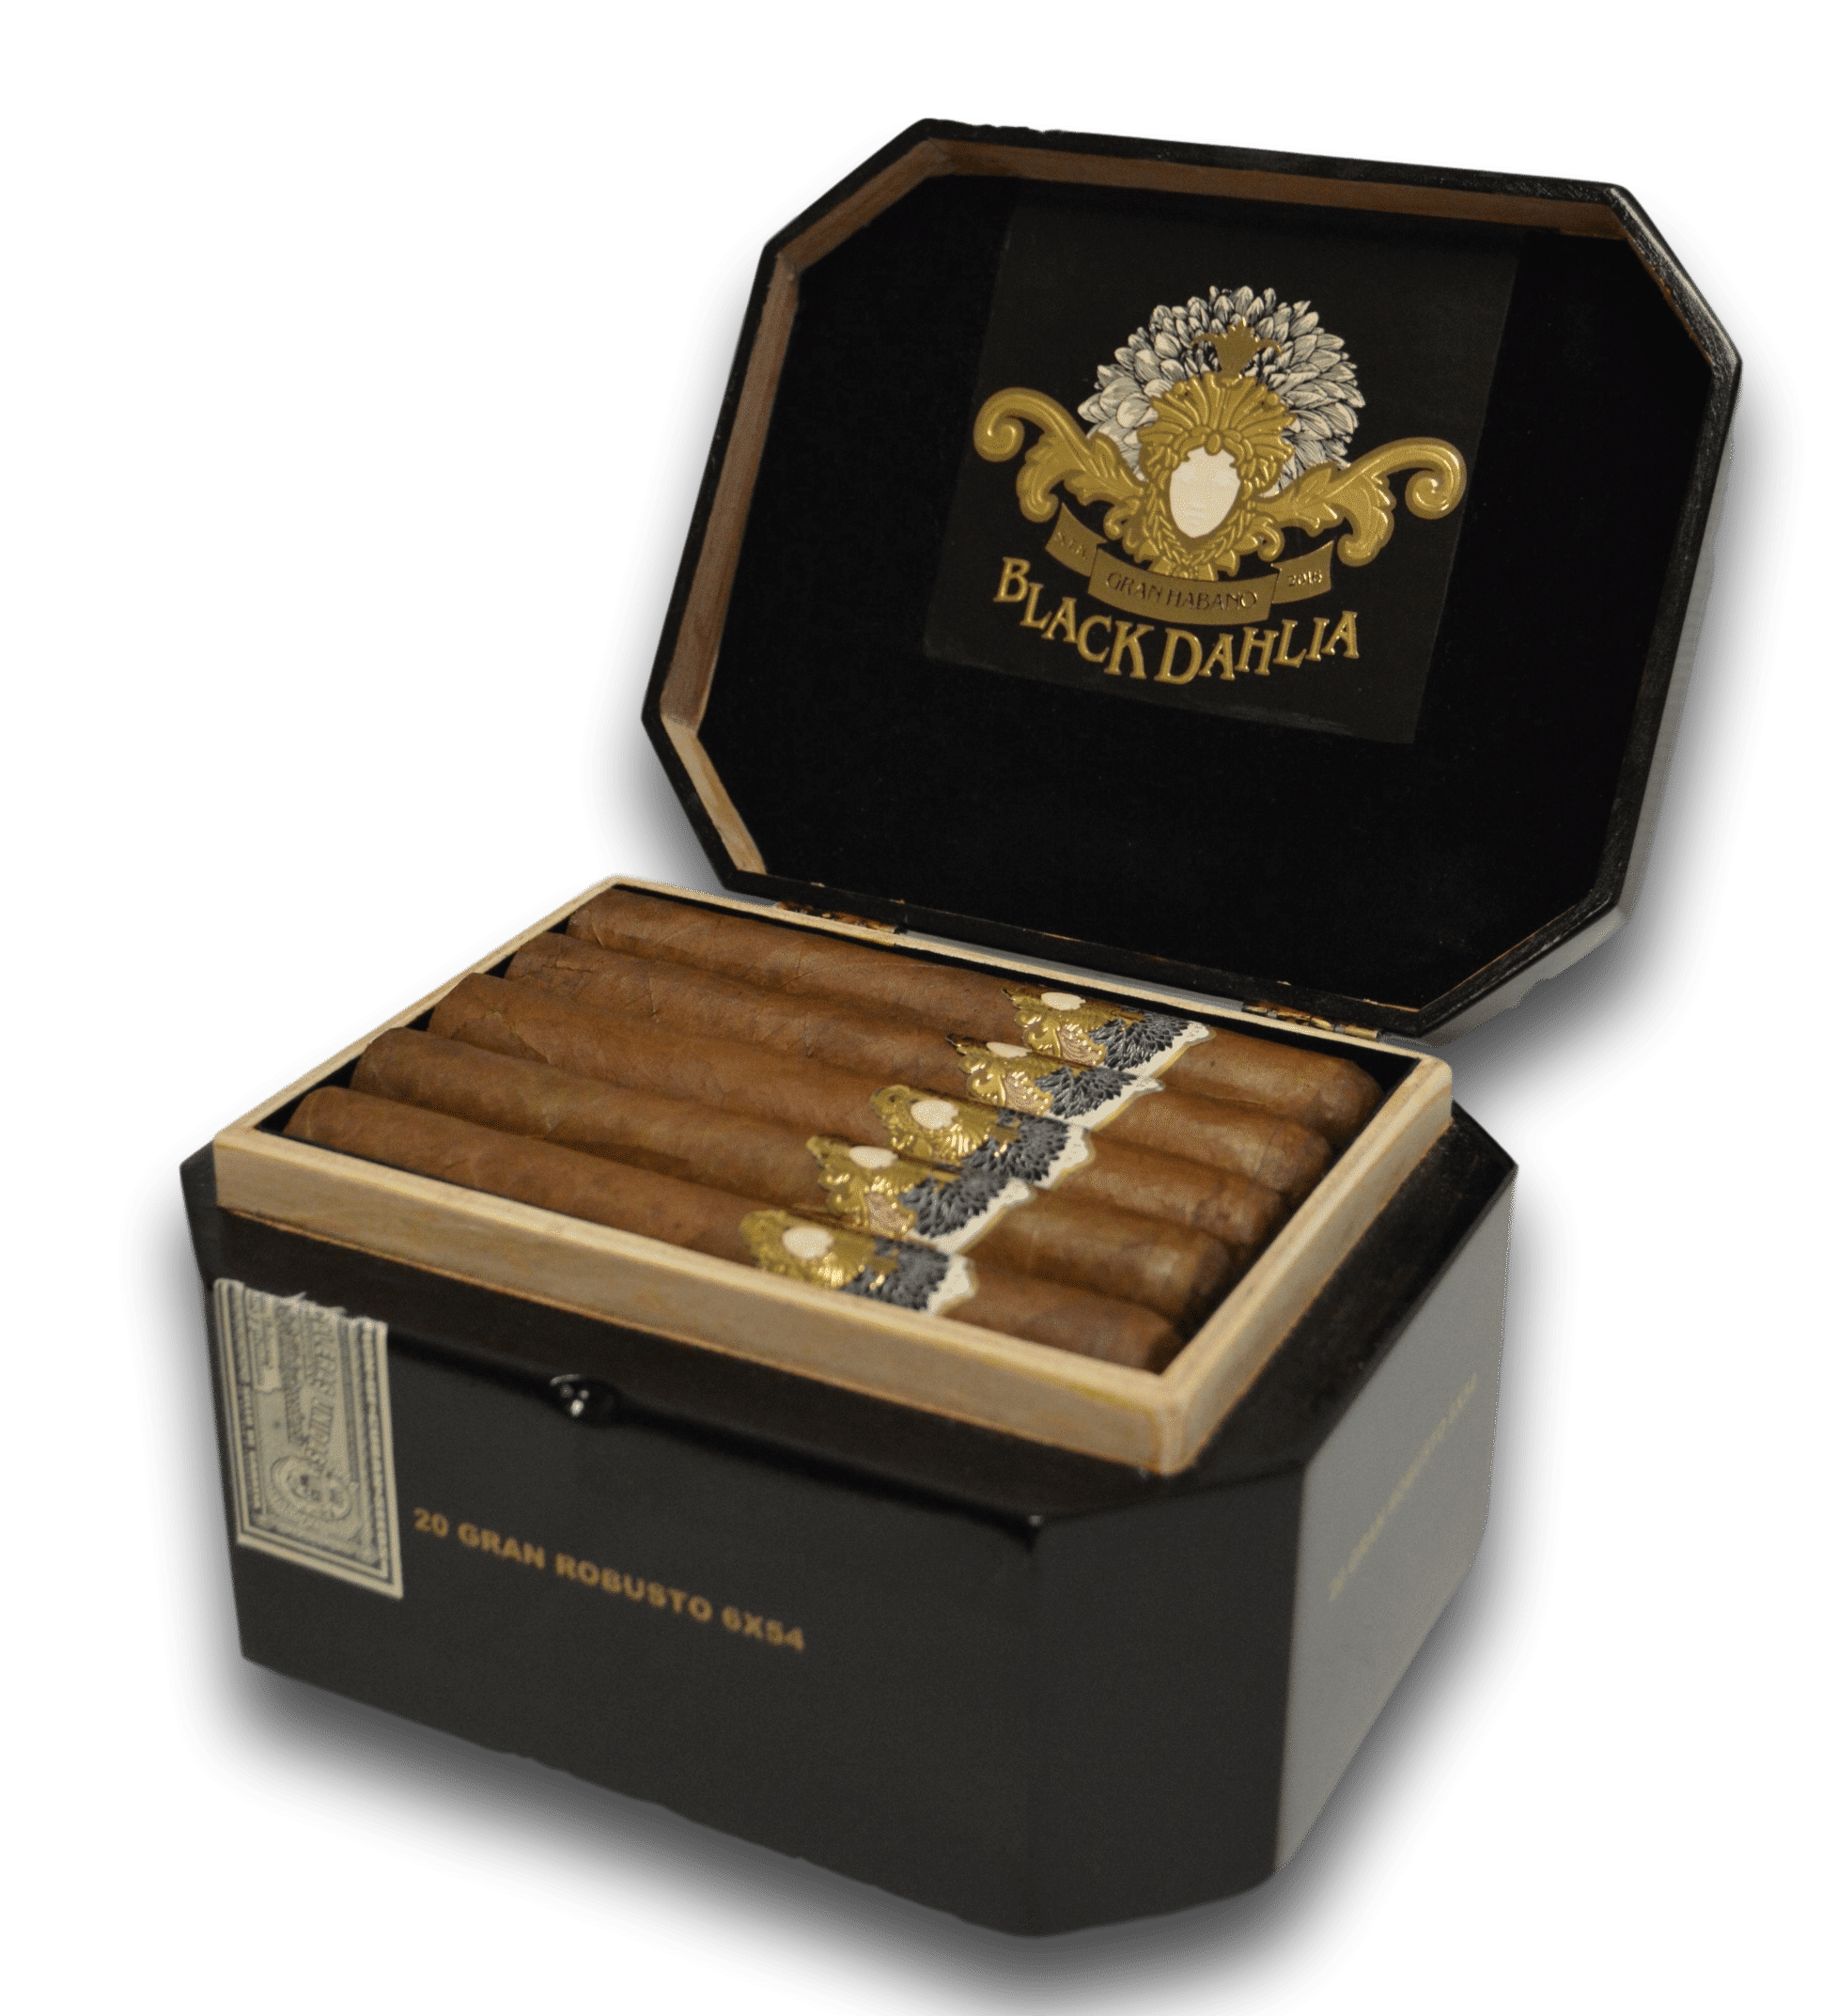 Cigar News: Gran Habano Announces S.T.K. Black Dahlia by George Rico